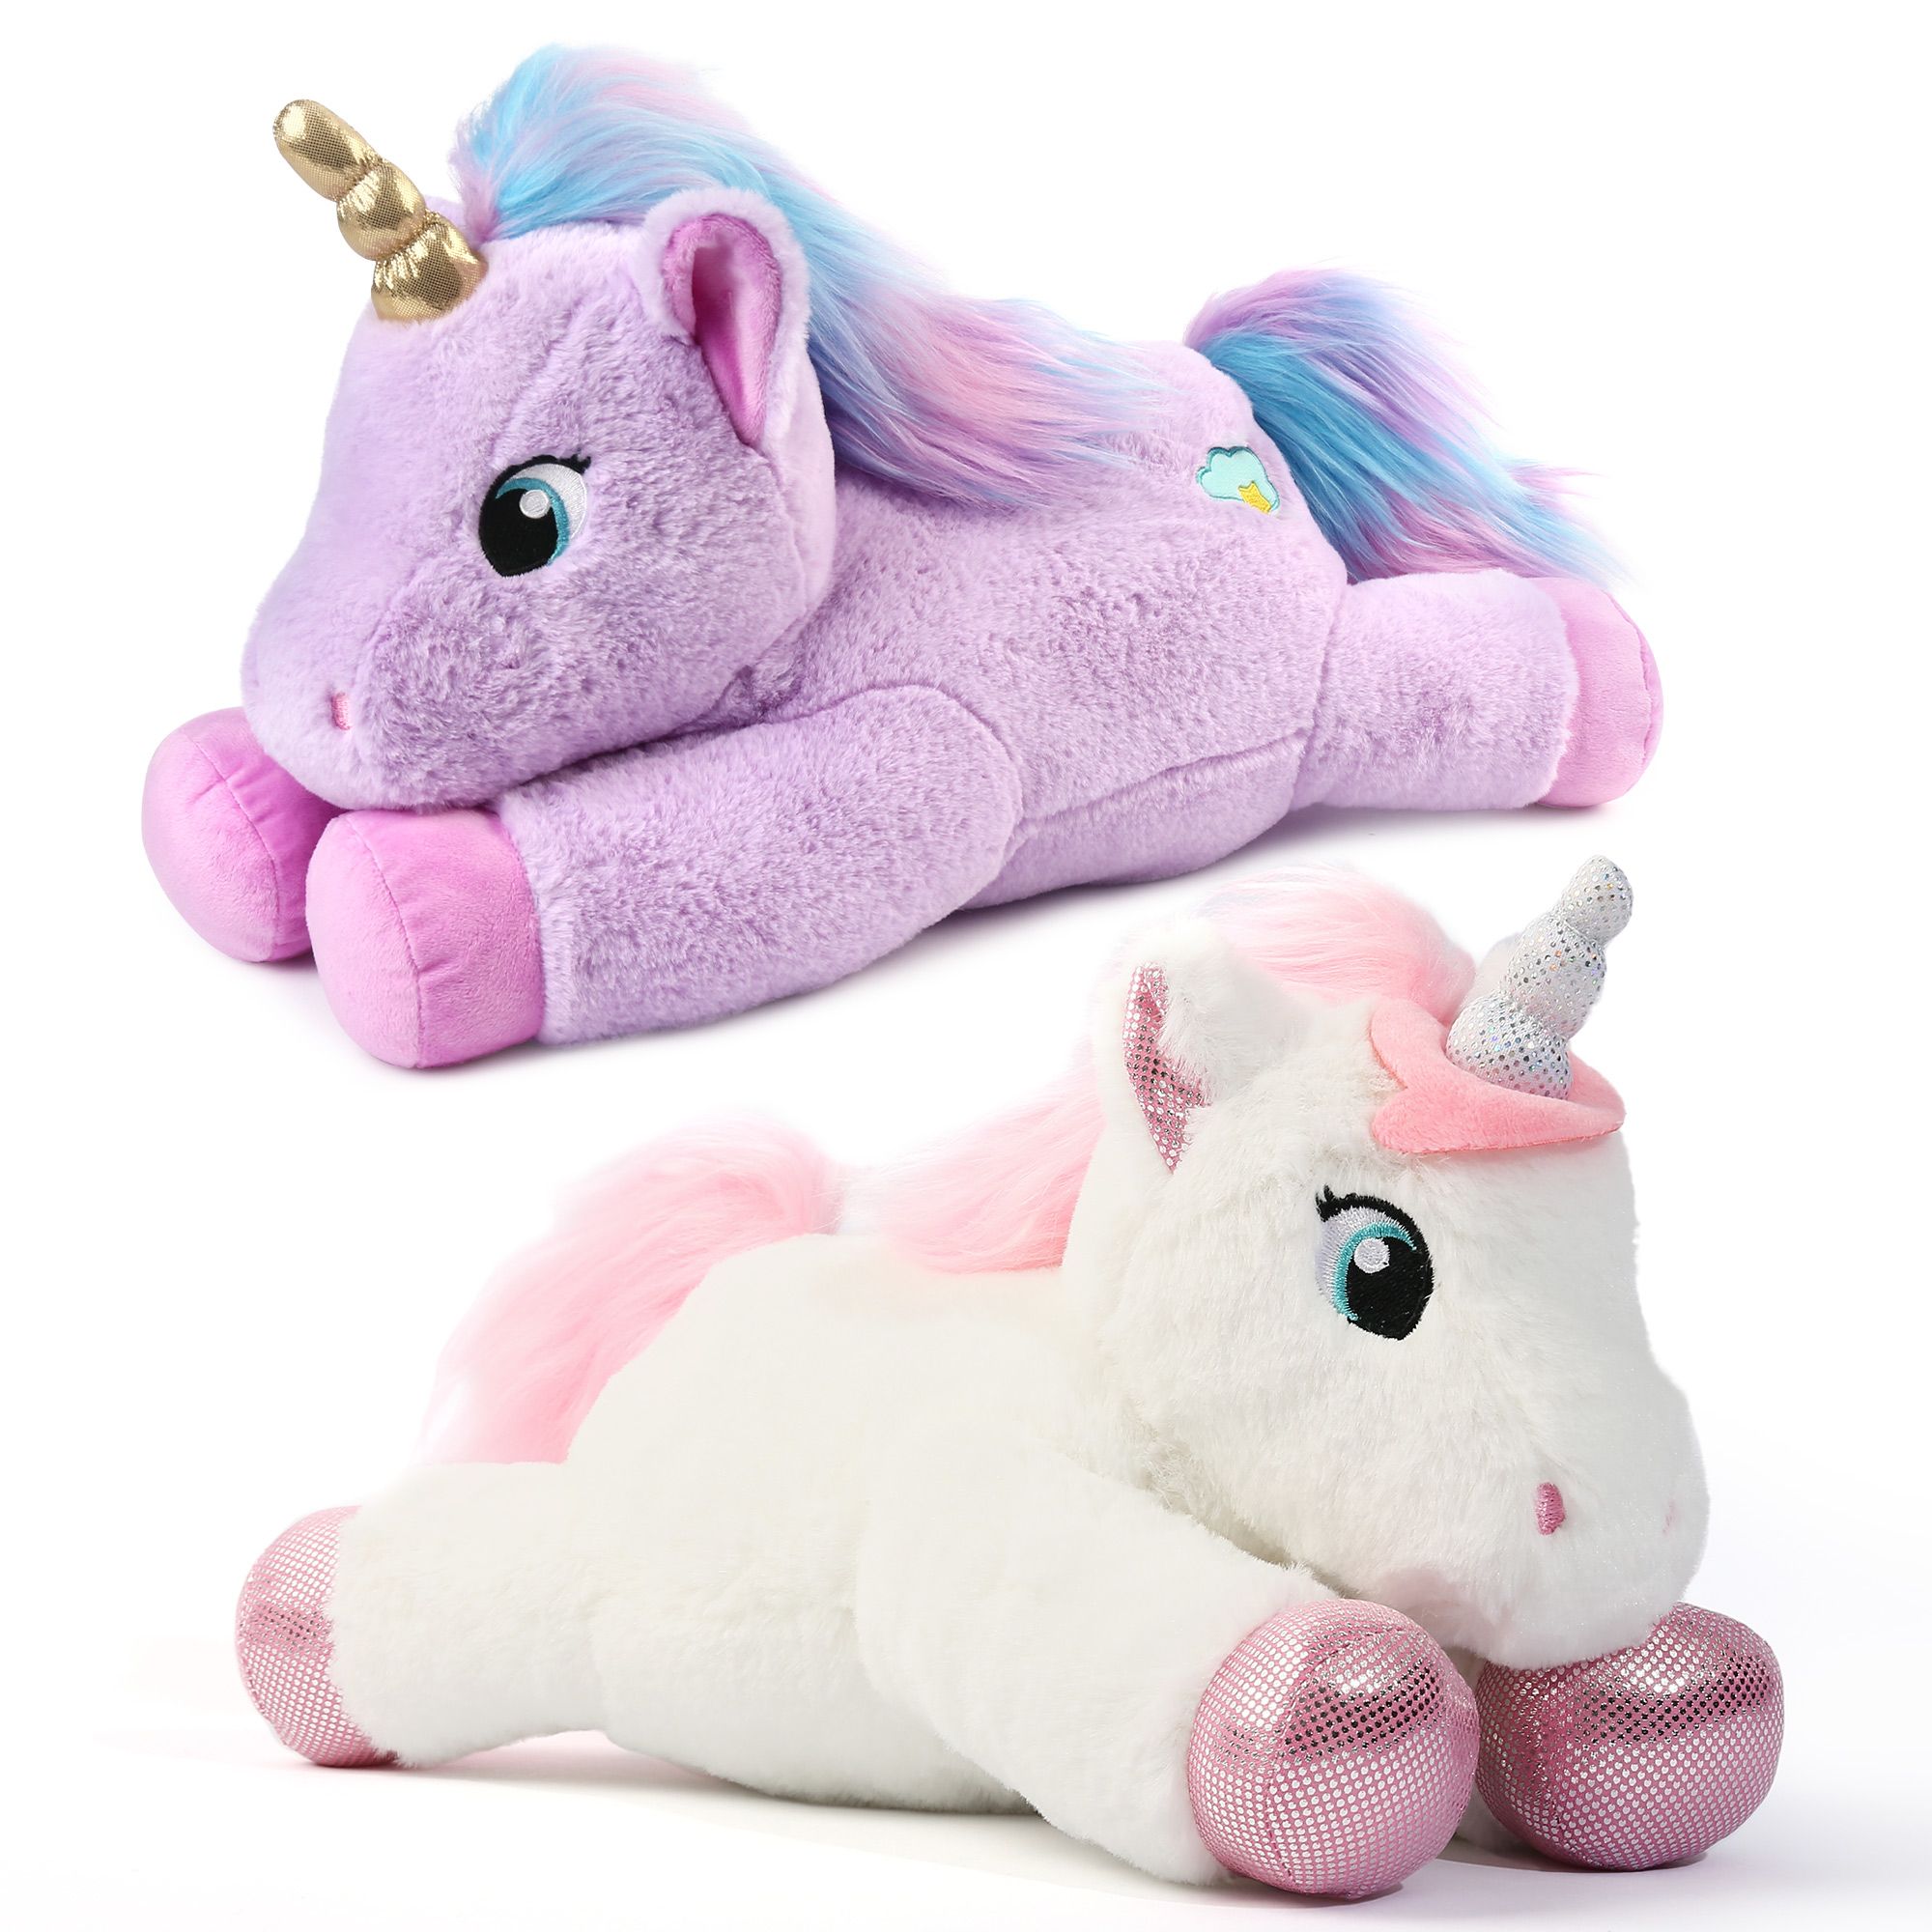 LotFancy 2 Pcs 12" Unicorn Stuffed Animal Plush Toys Gifts for Kids, Girls, Purple and White - image 1 of 9